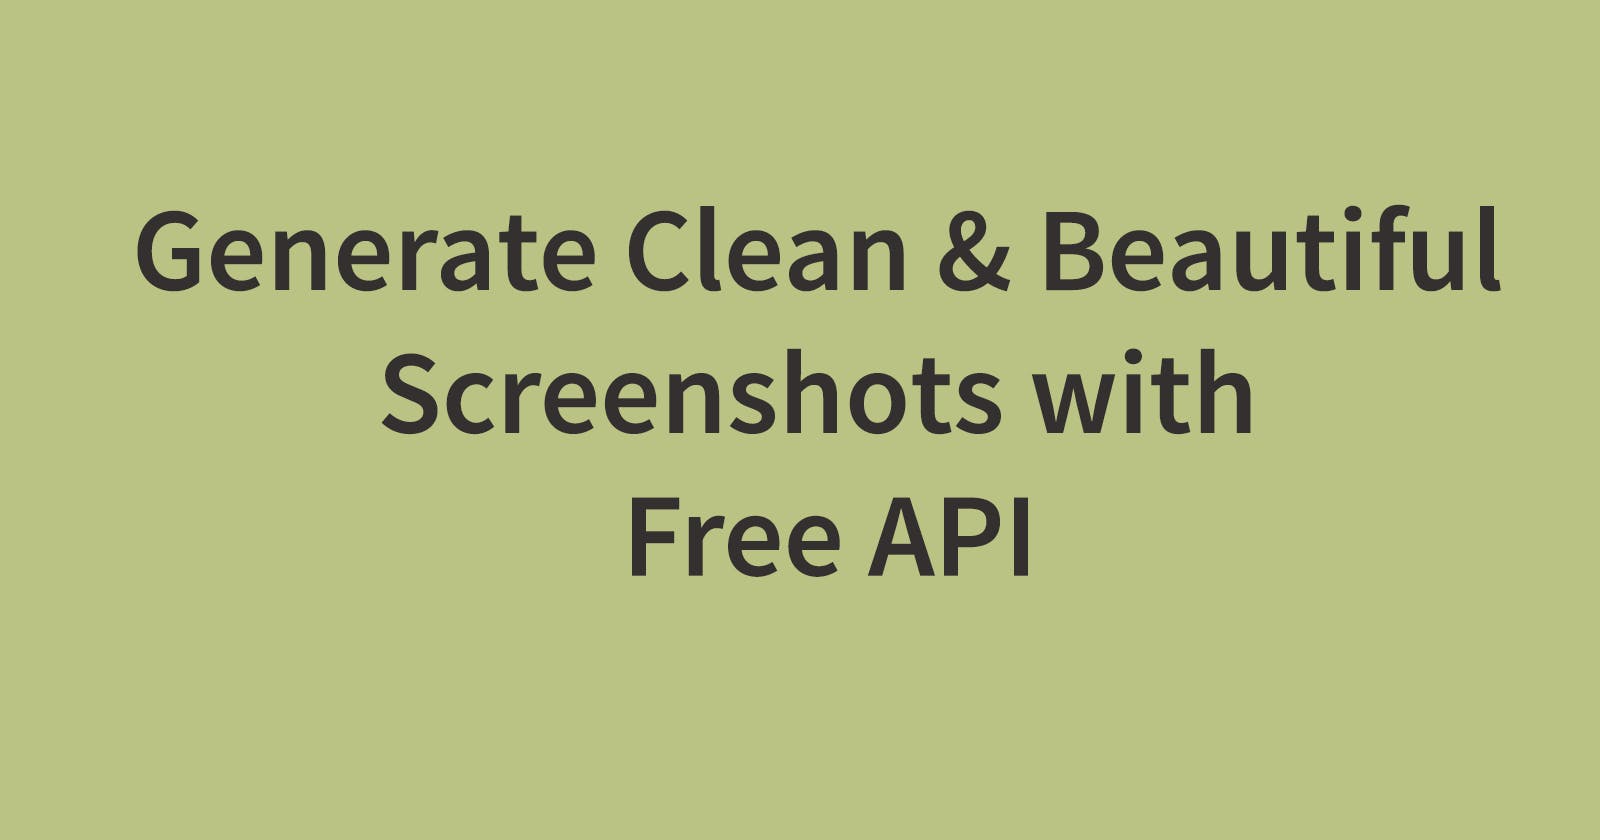 Generate Clean & Beautiful Screenshots with Free API